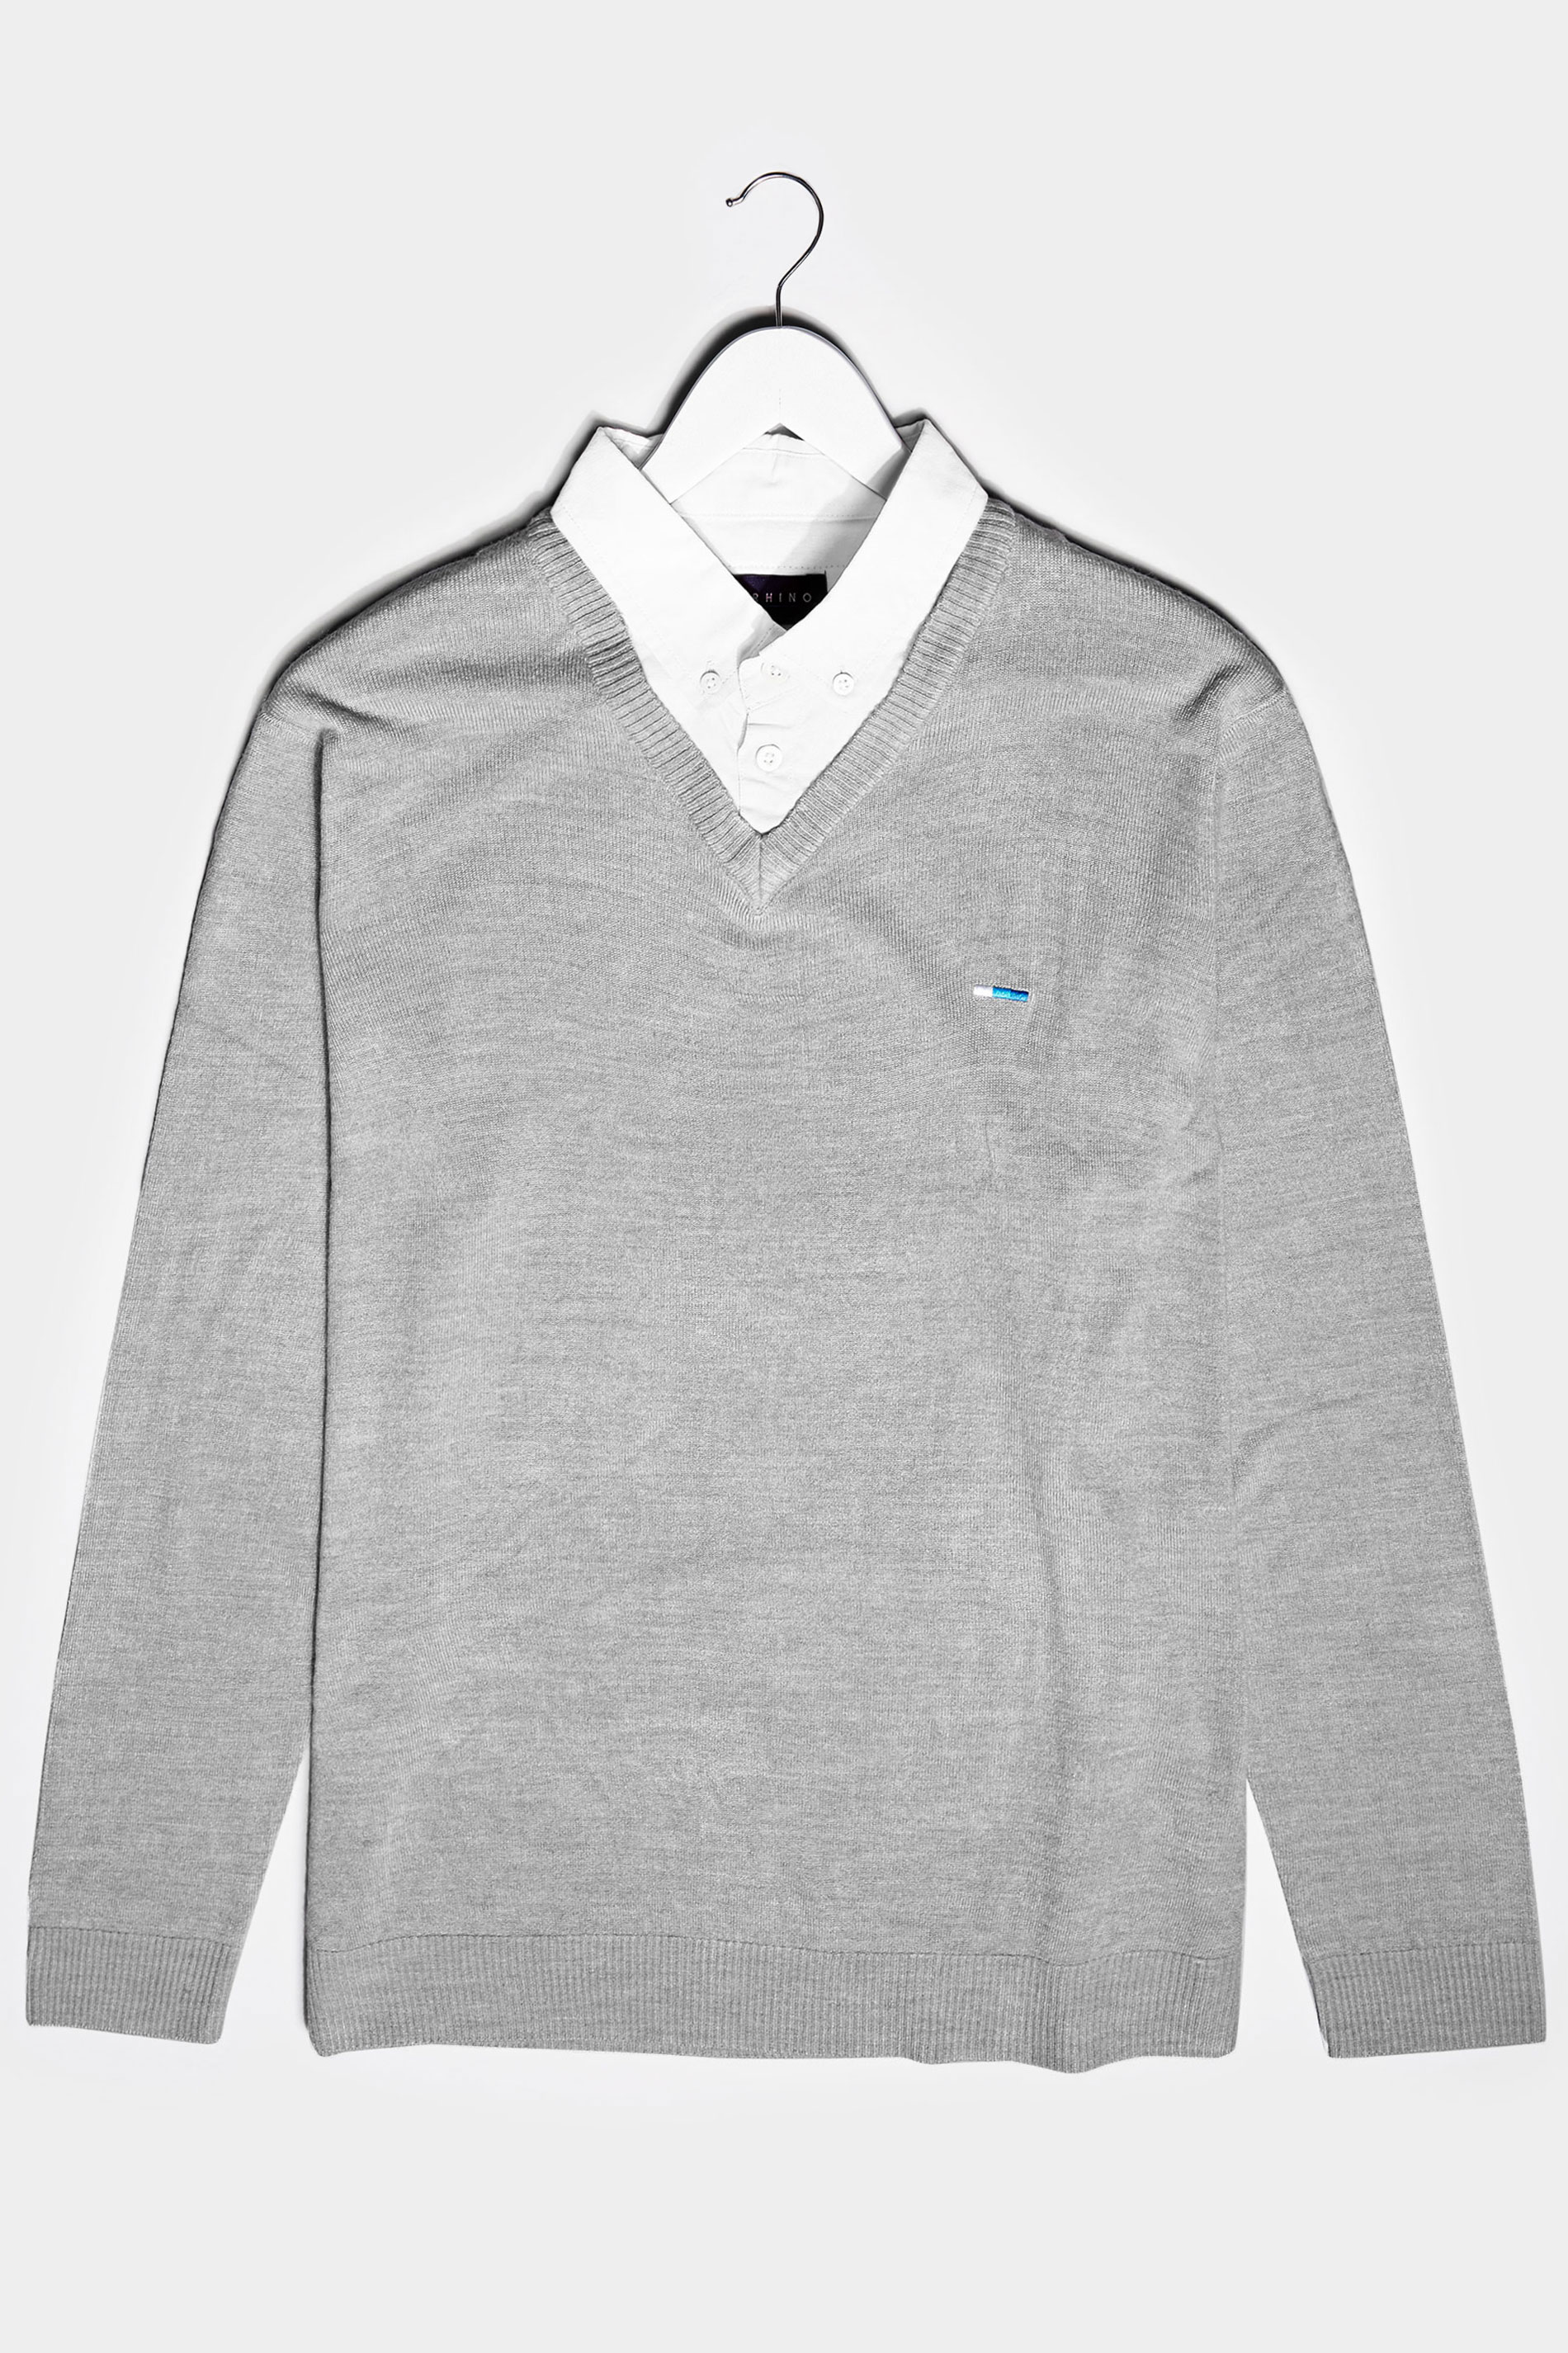 BadRhino Light Grey & White Essential Mock Shirt Jumper_F.jpg